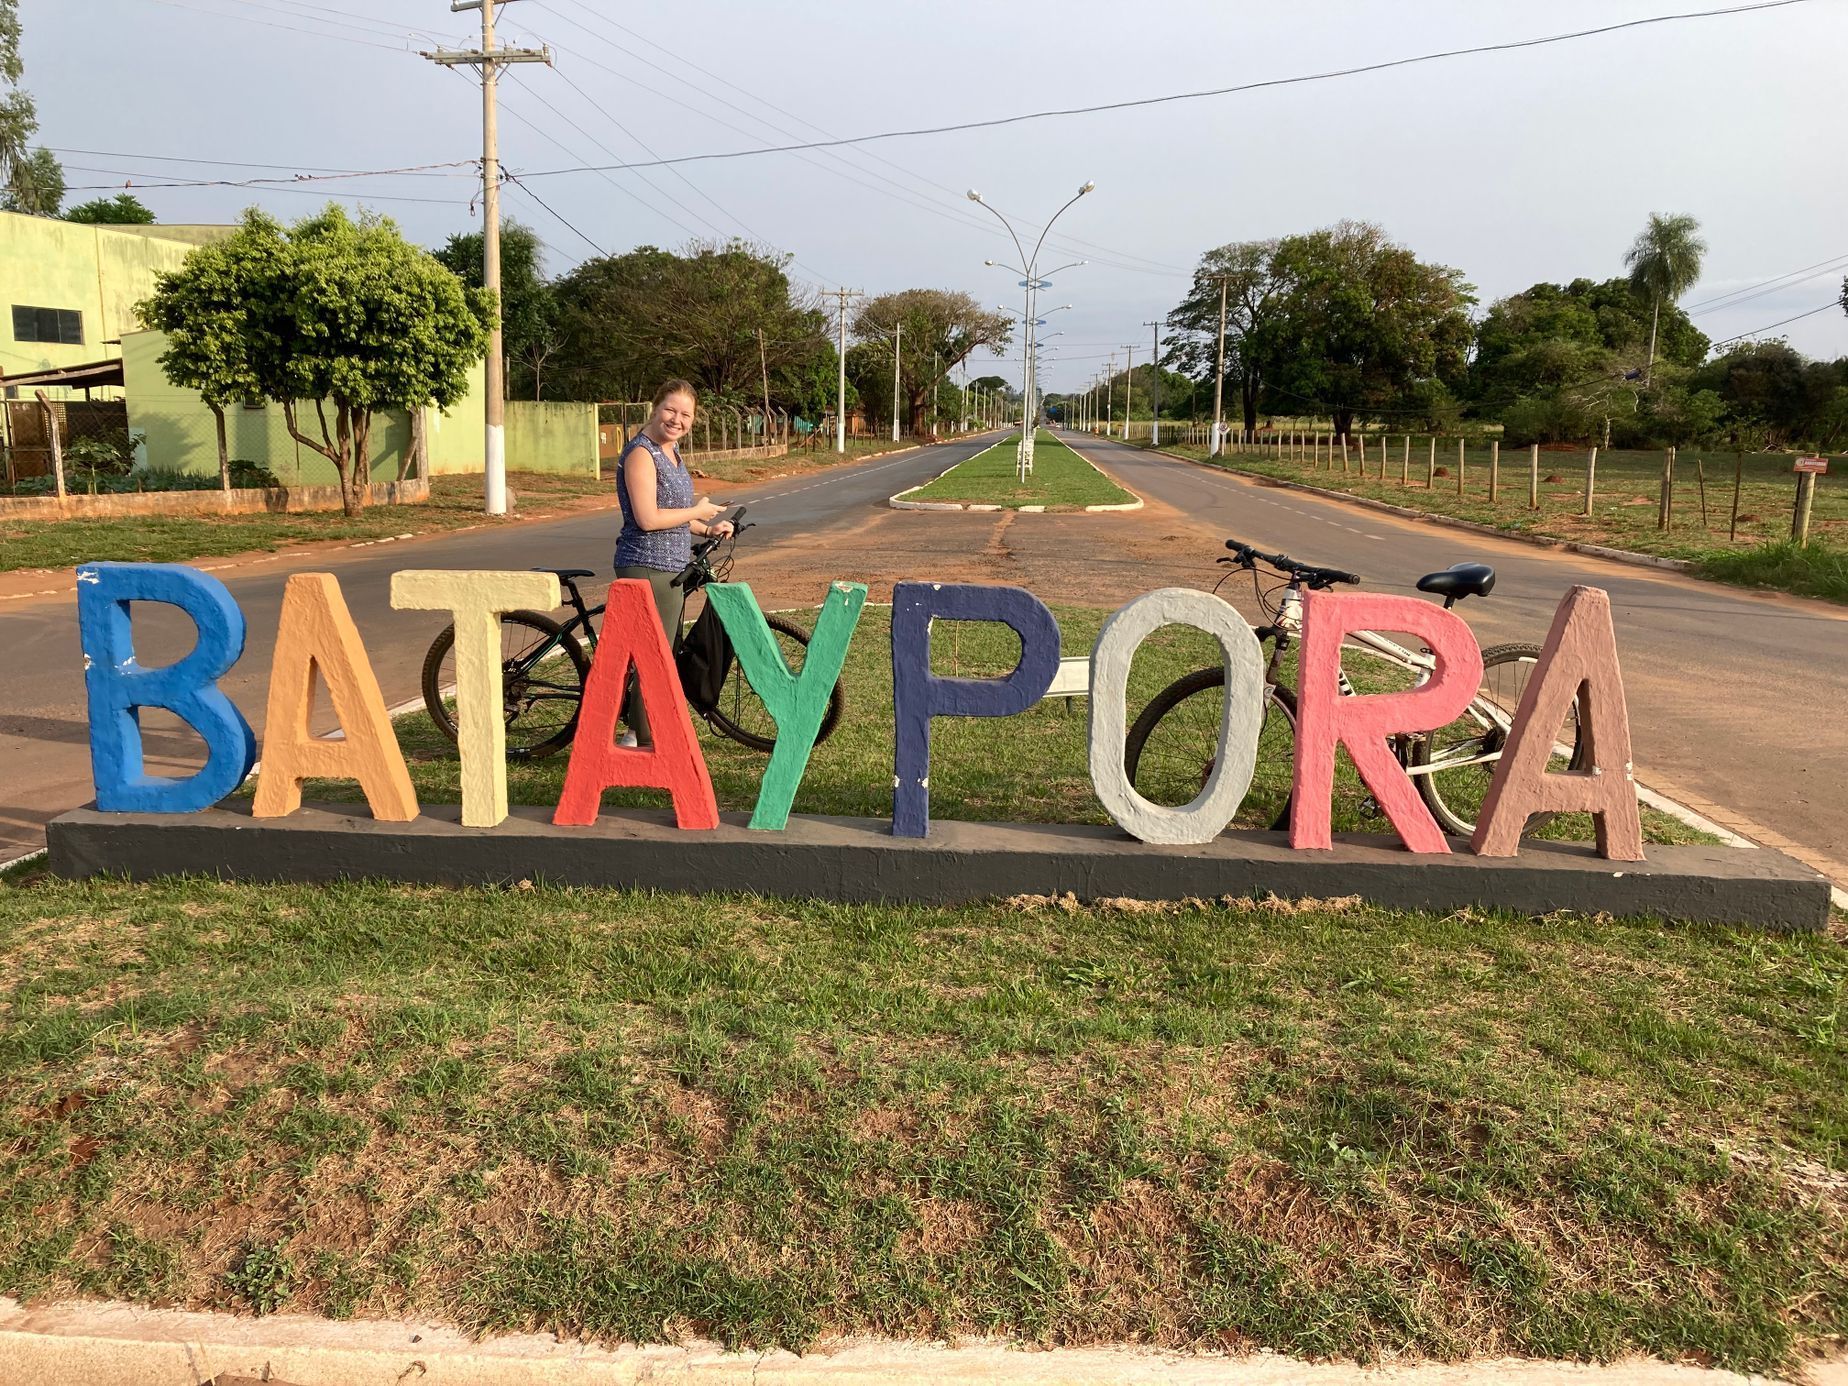 Bataypora